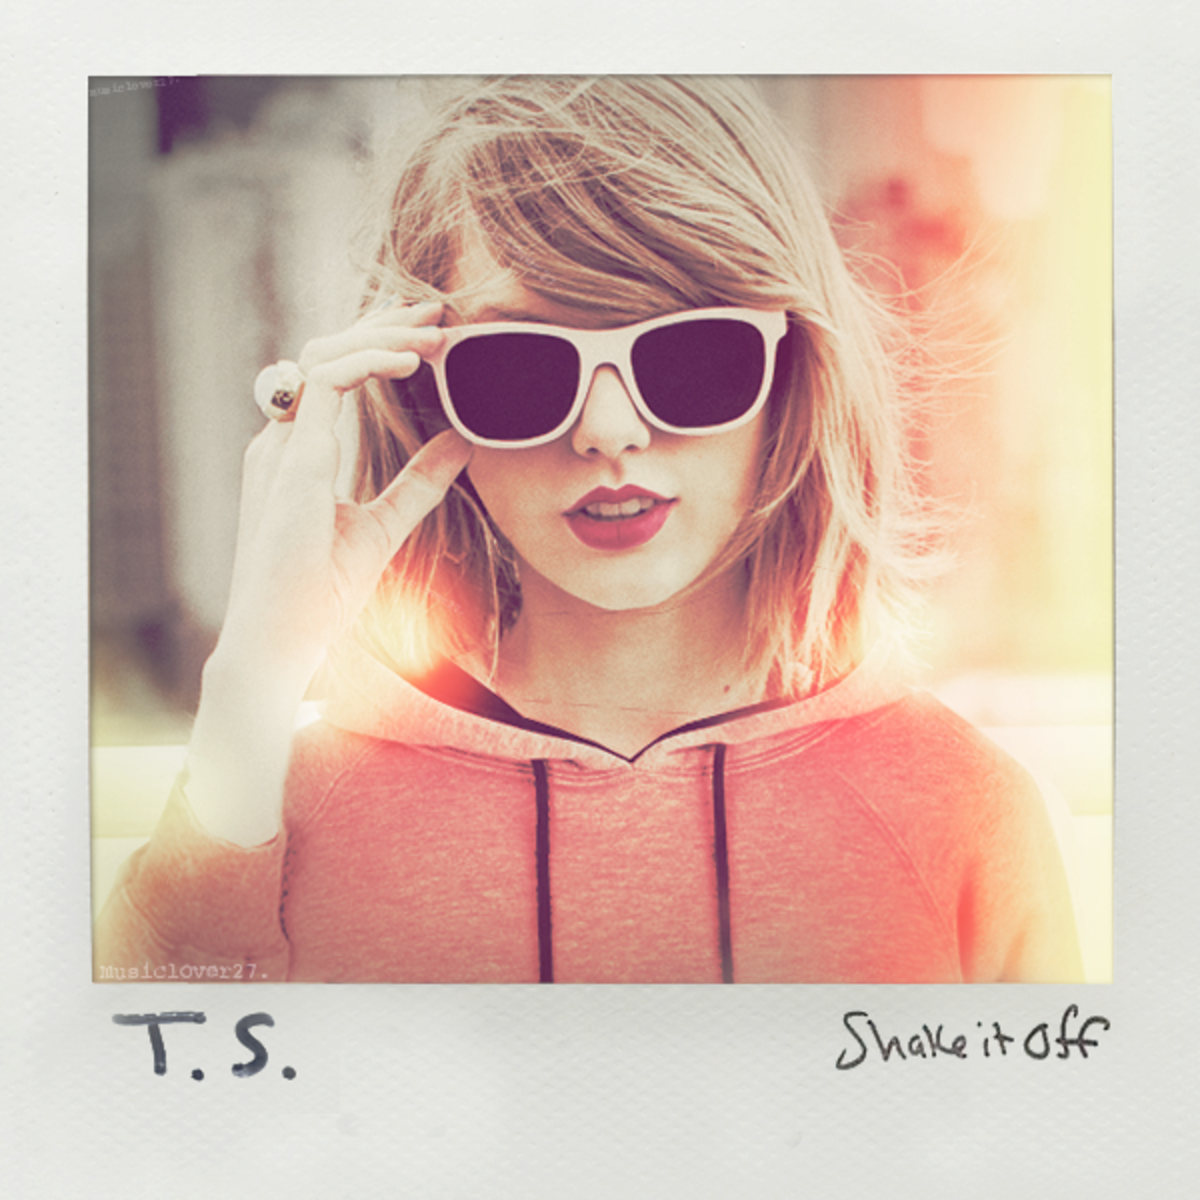 Тейлор Свифт Шейк. Taylor Swift Shake it off. Taylor Swift Shake it off обложка. Taylor Swift Shake it off 2014. Шейк тейлор